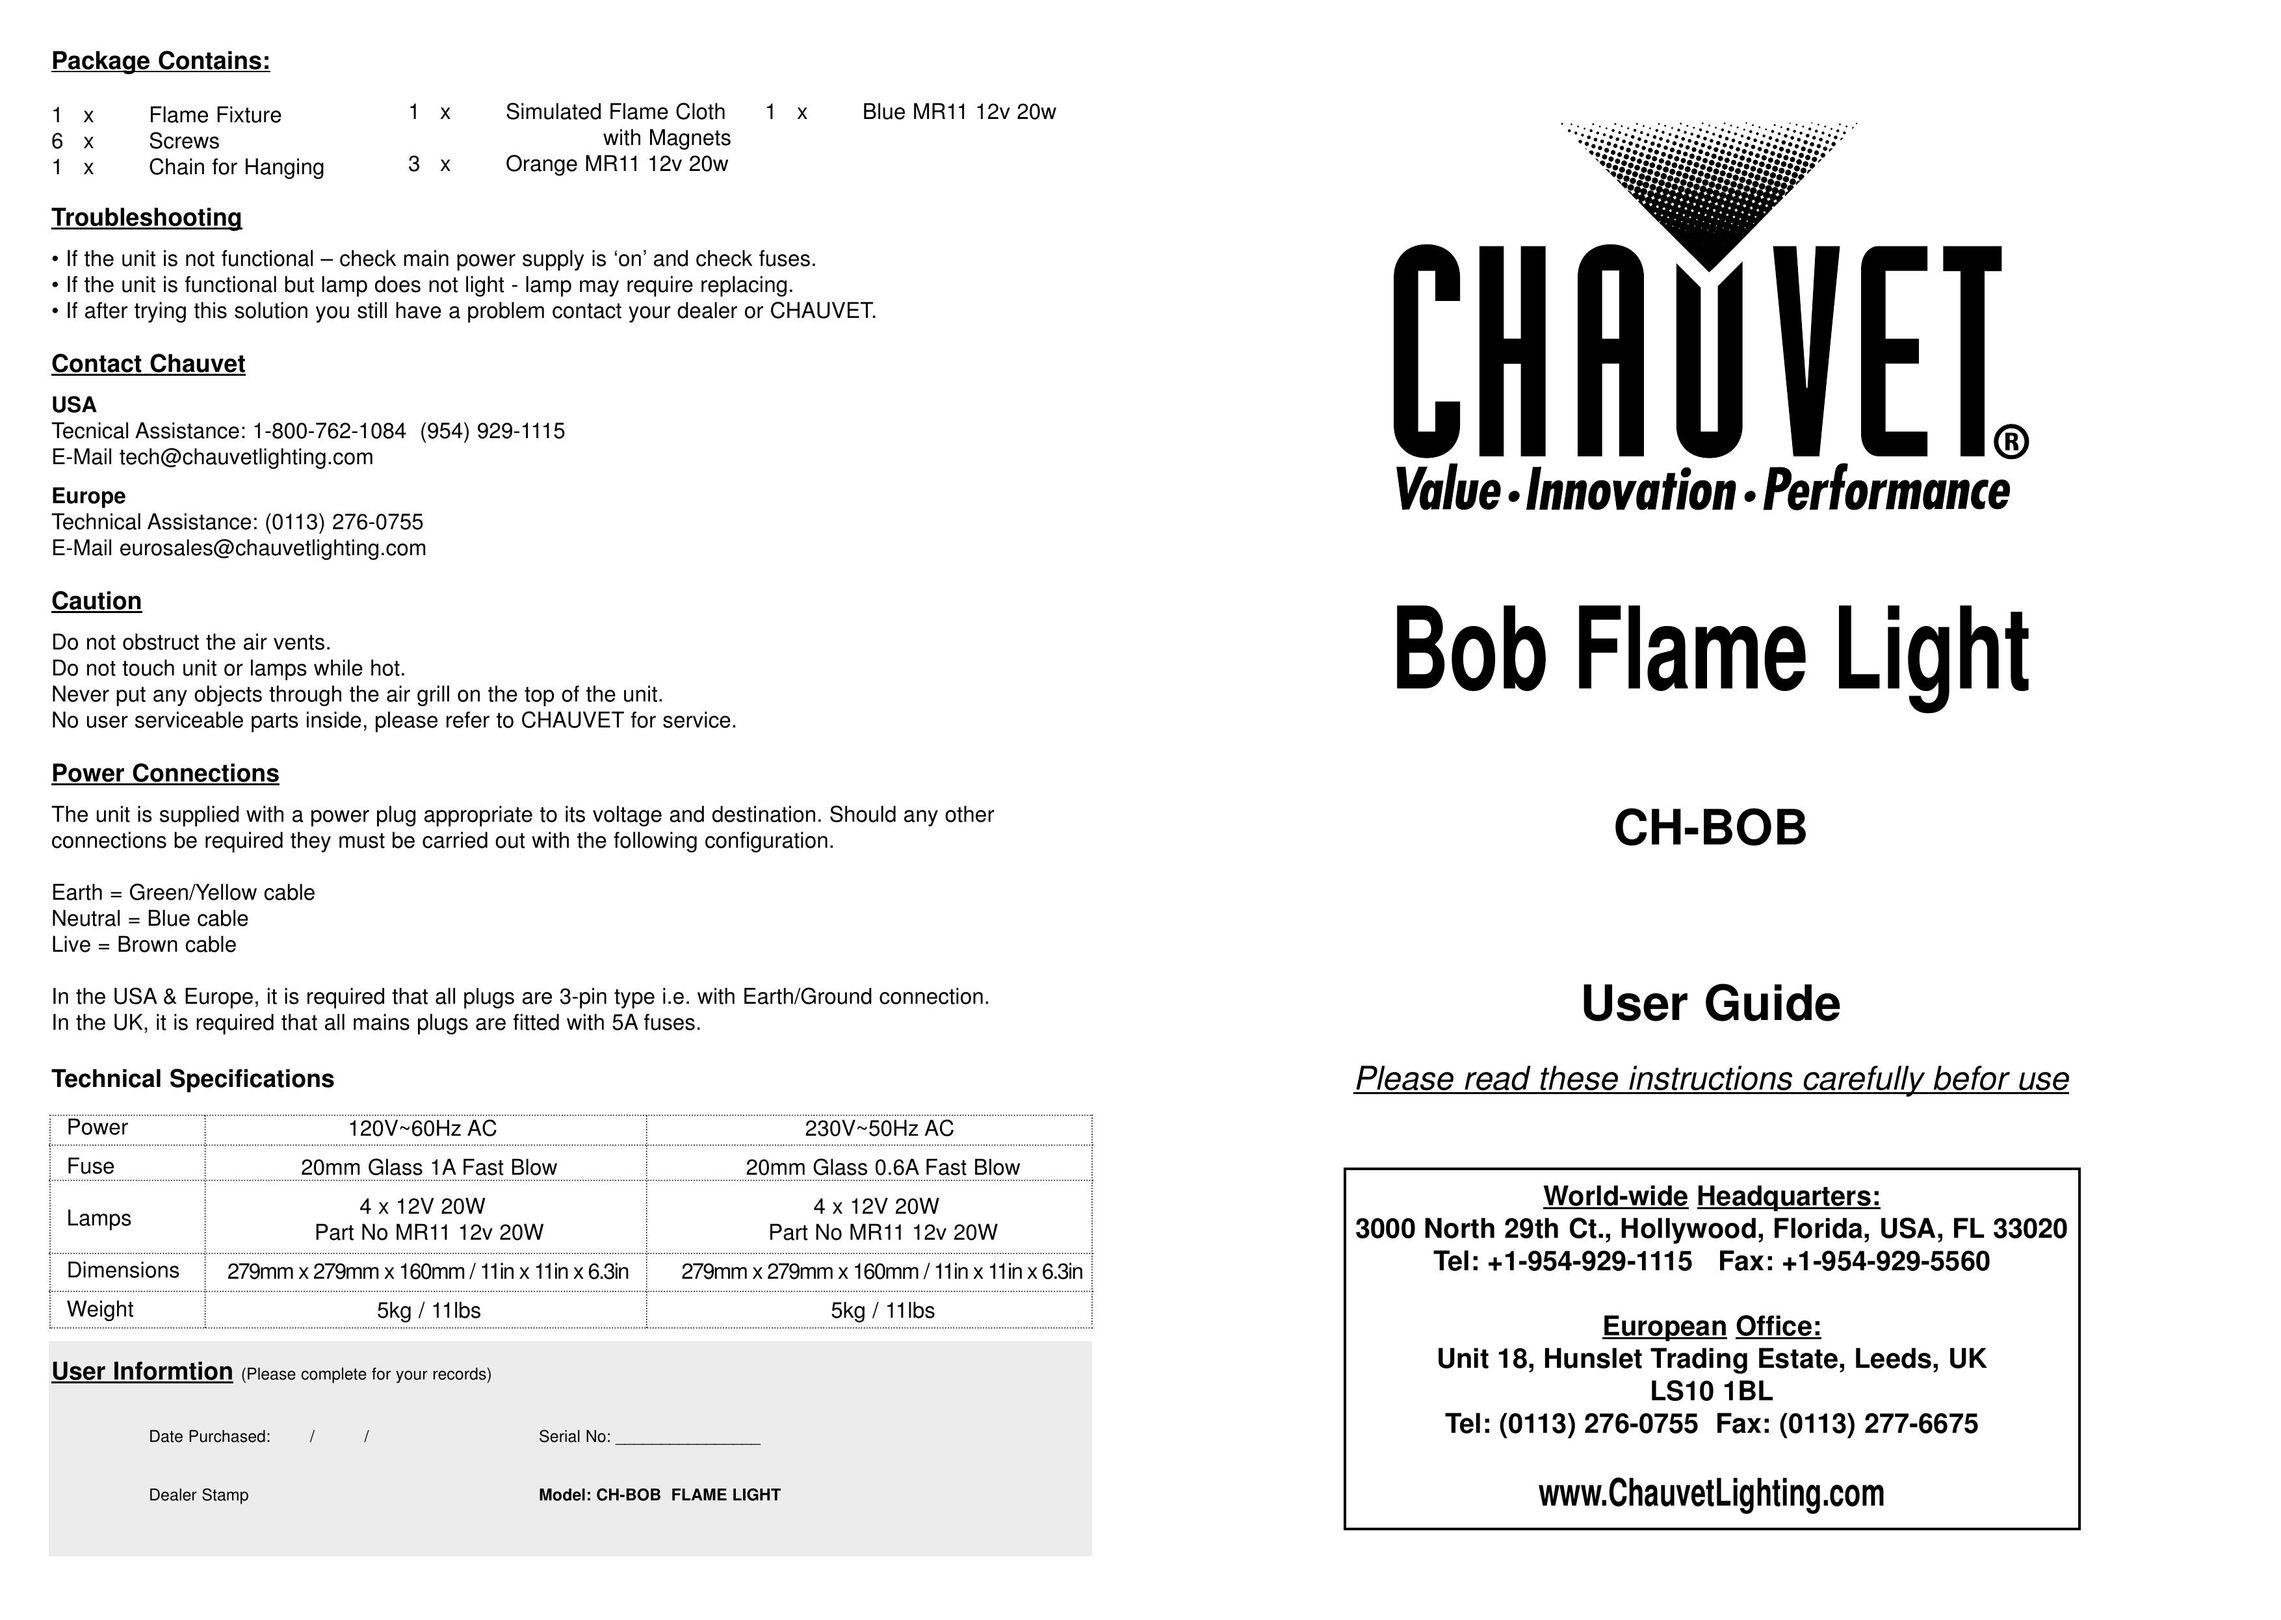 Chauvet CH-BOB Work Light User Manual